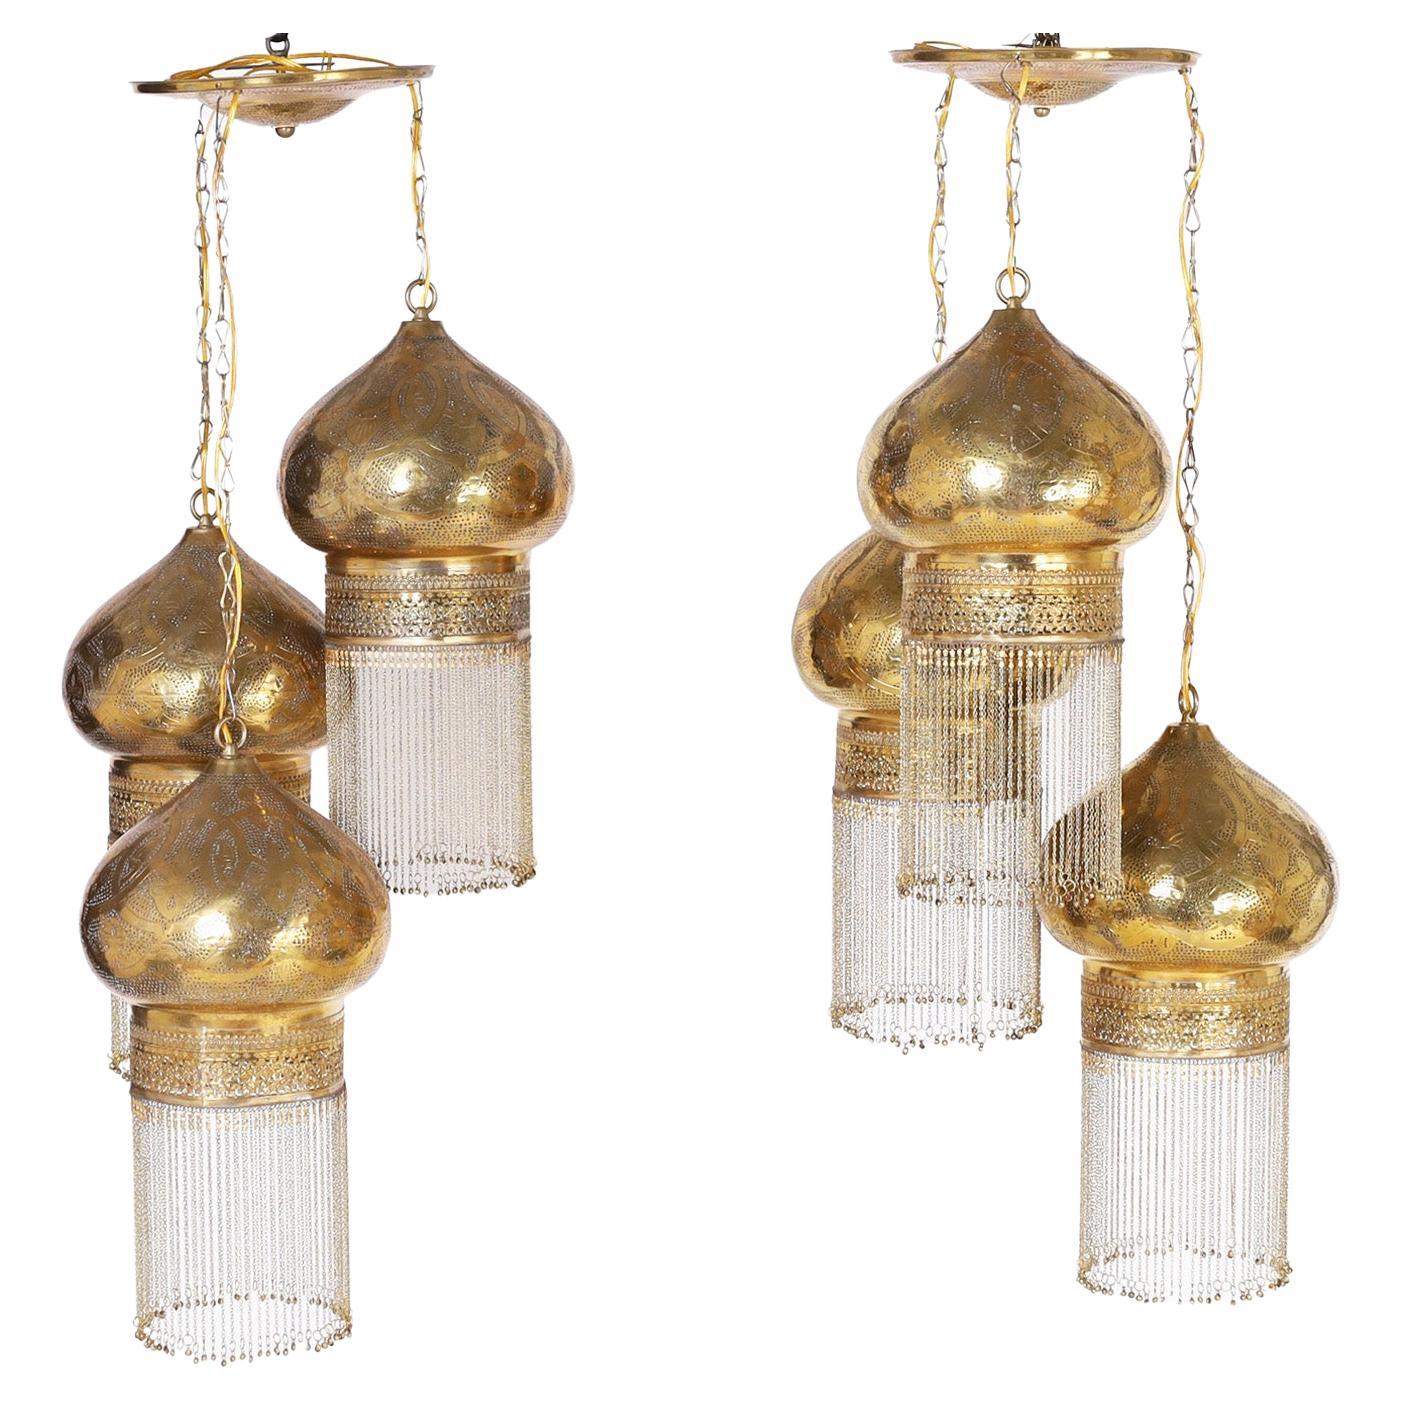 Pair of Three Orientalist Light Brass Light Fixtures or Chandeliers